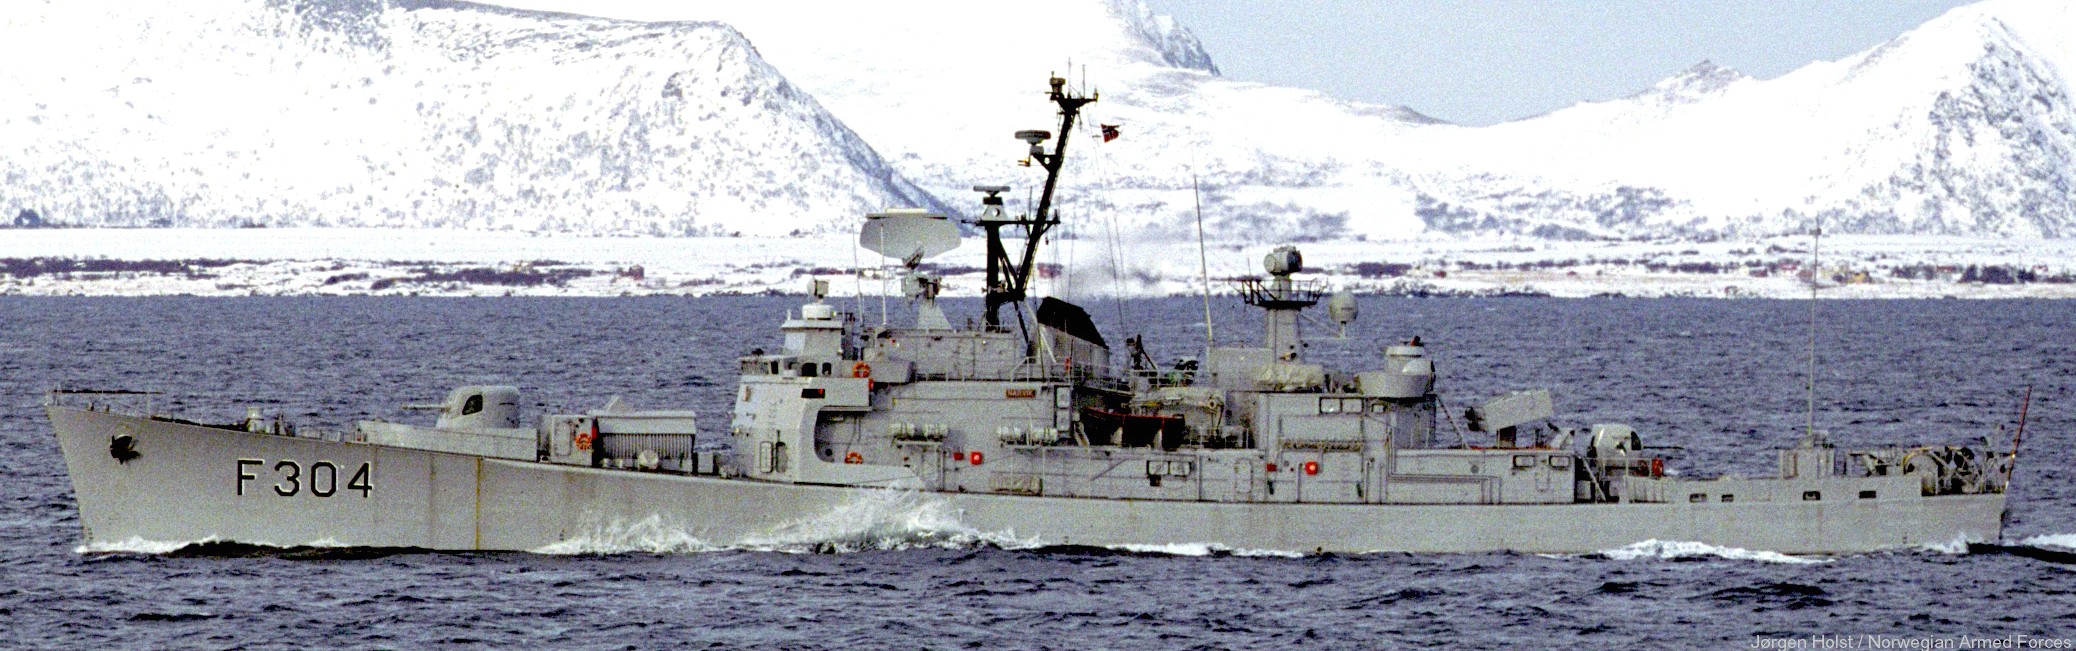 f-304 hnoms narvik knm oslo class frigate royal norwegian navy sjoforsvaret 16